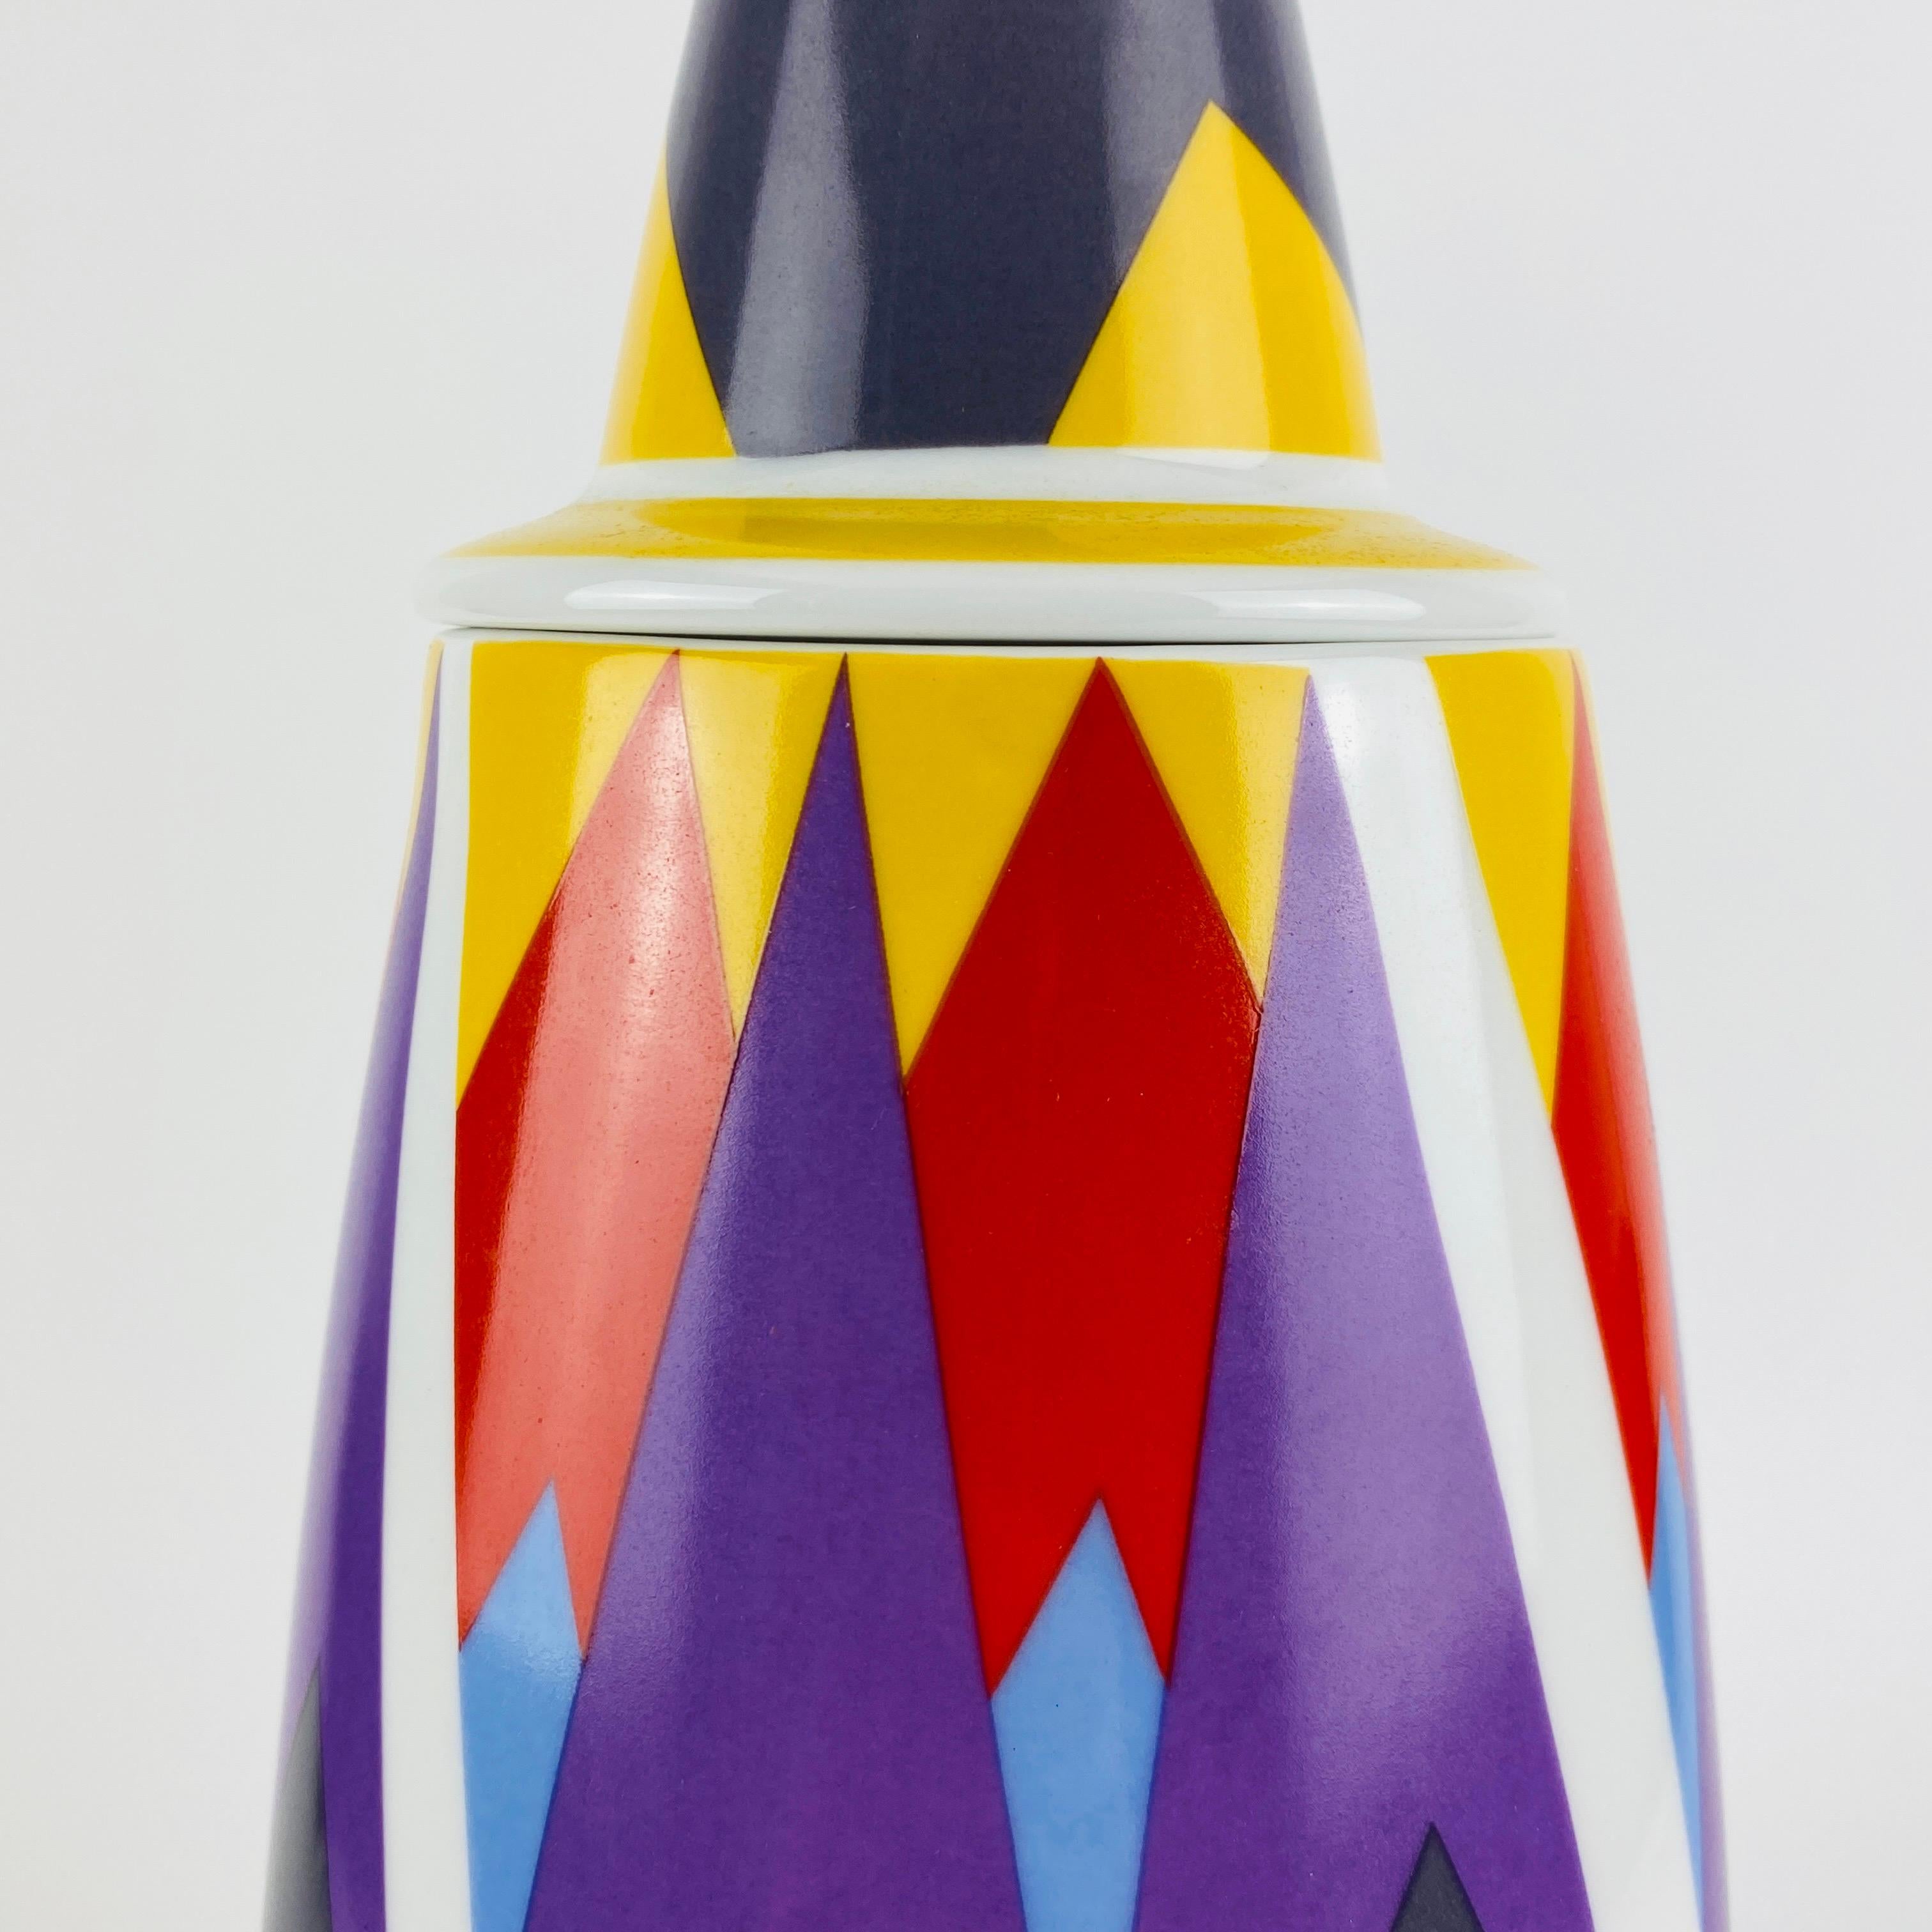 Alessi Tendentse Vase by Robert Venturi for A. Mendini 100% Make-Up Serie N90 1